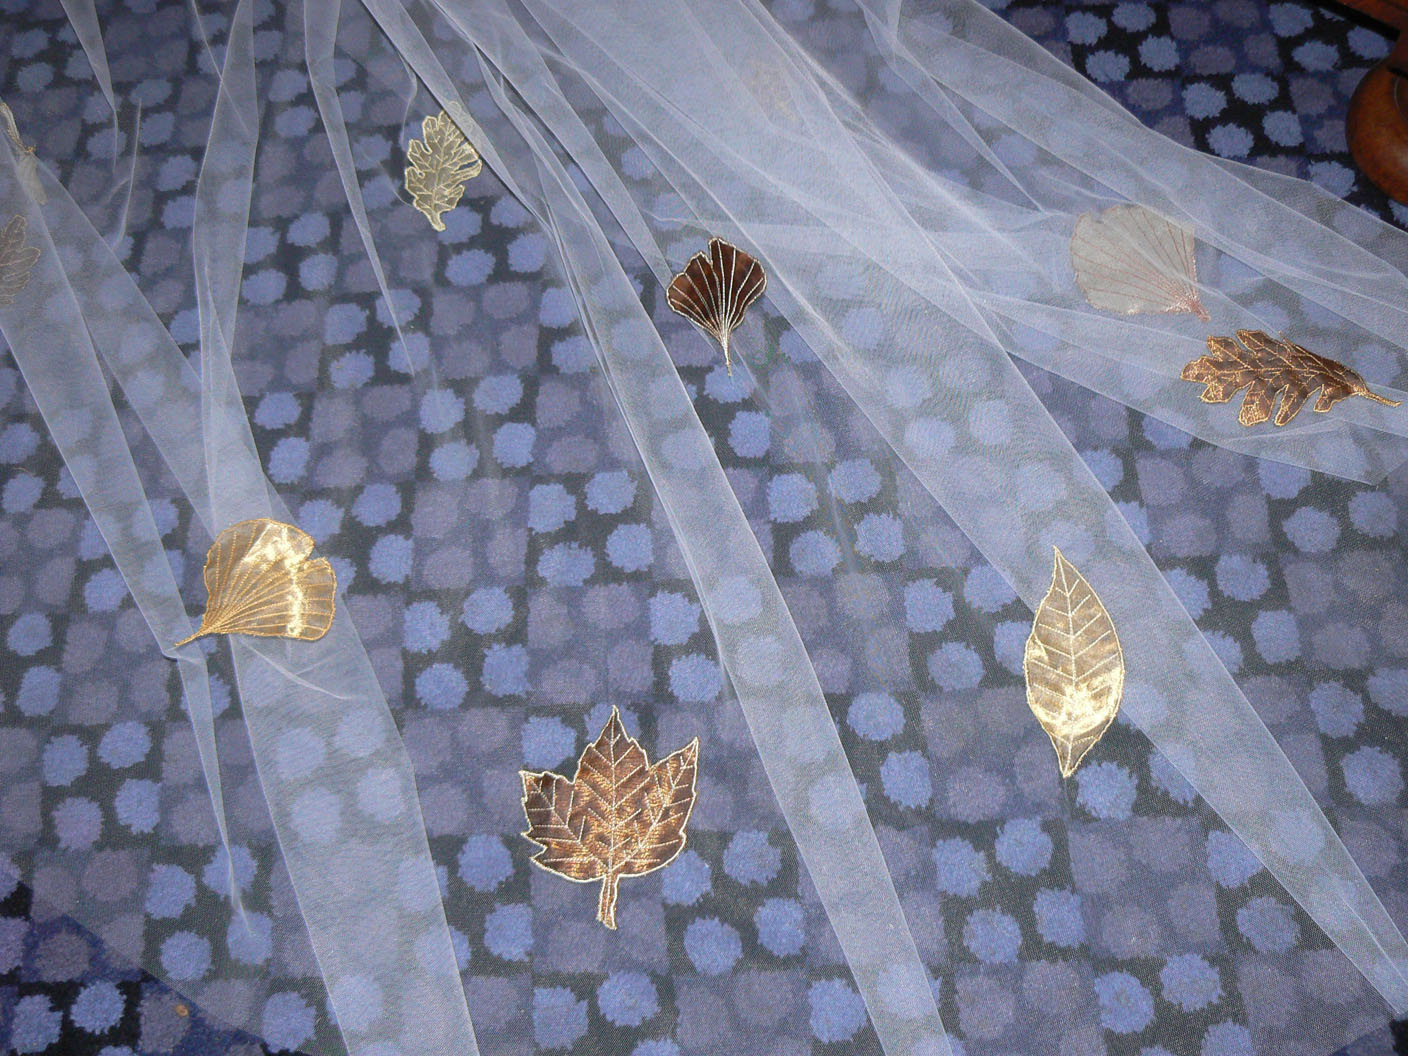 Bespoke bridal veil with appliqued silk organza leaves